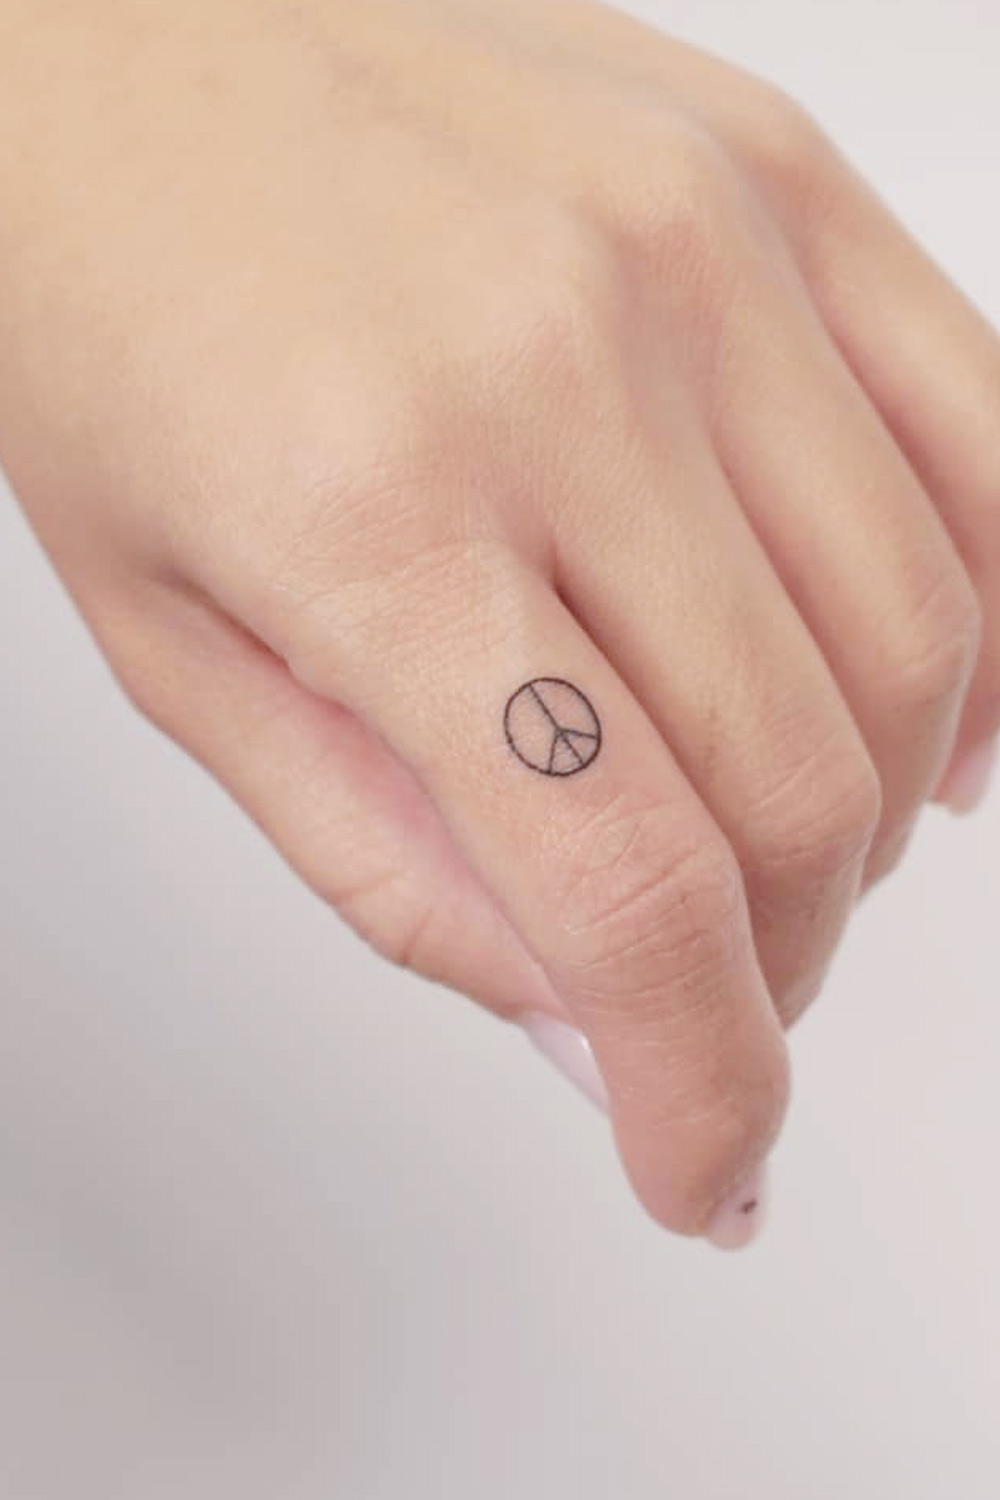 Symbol of Peace Tattoo Design